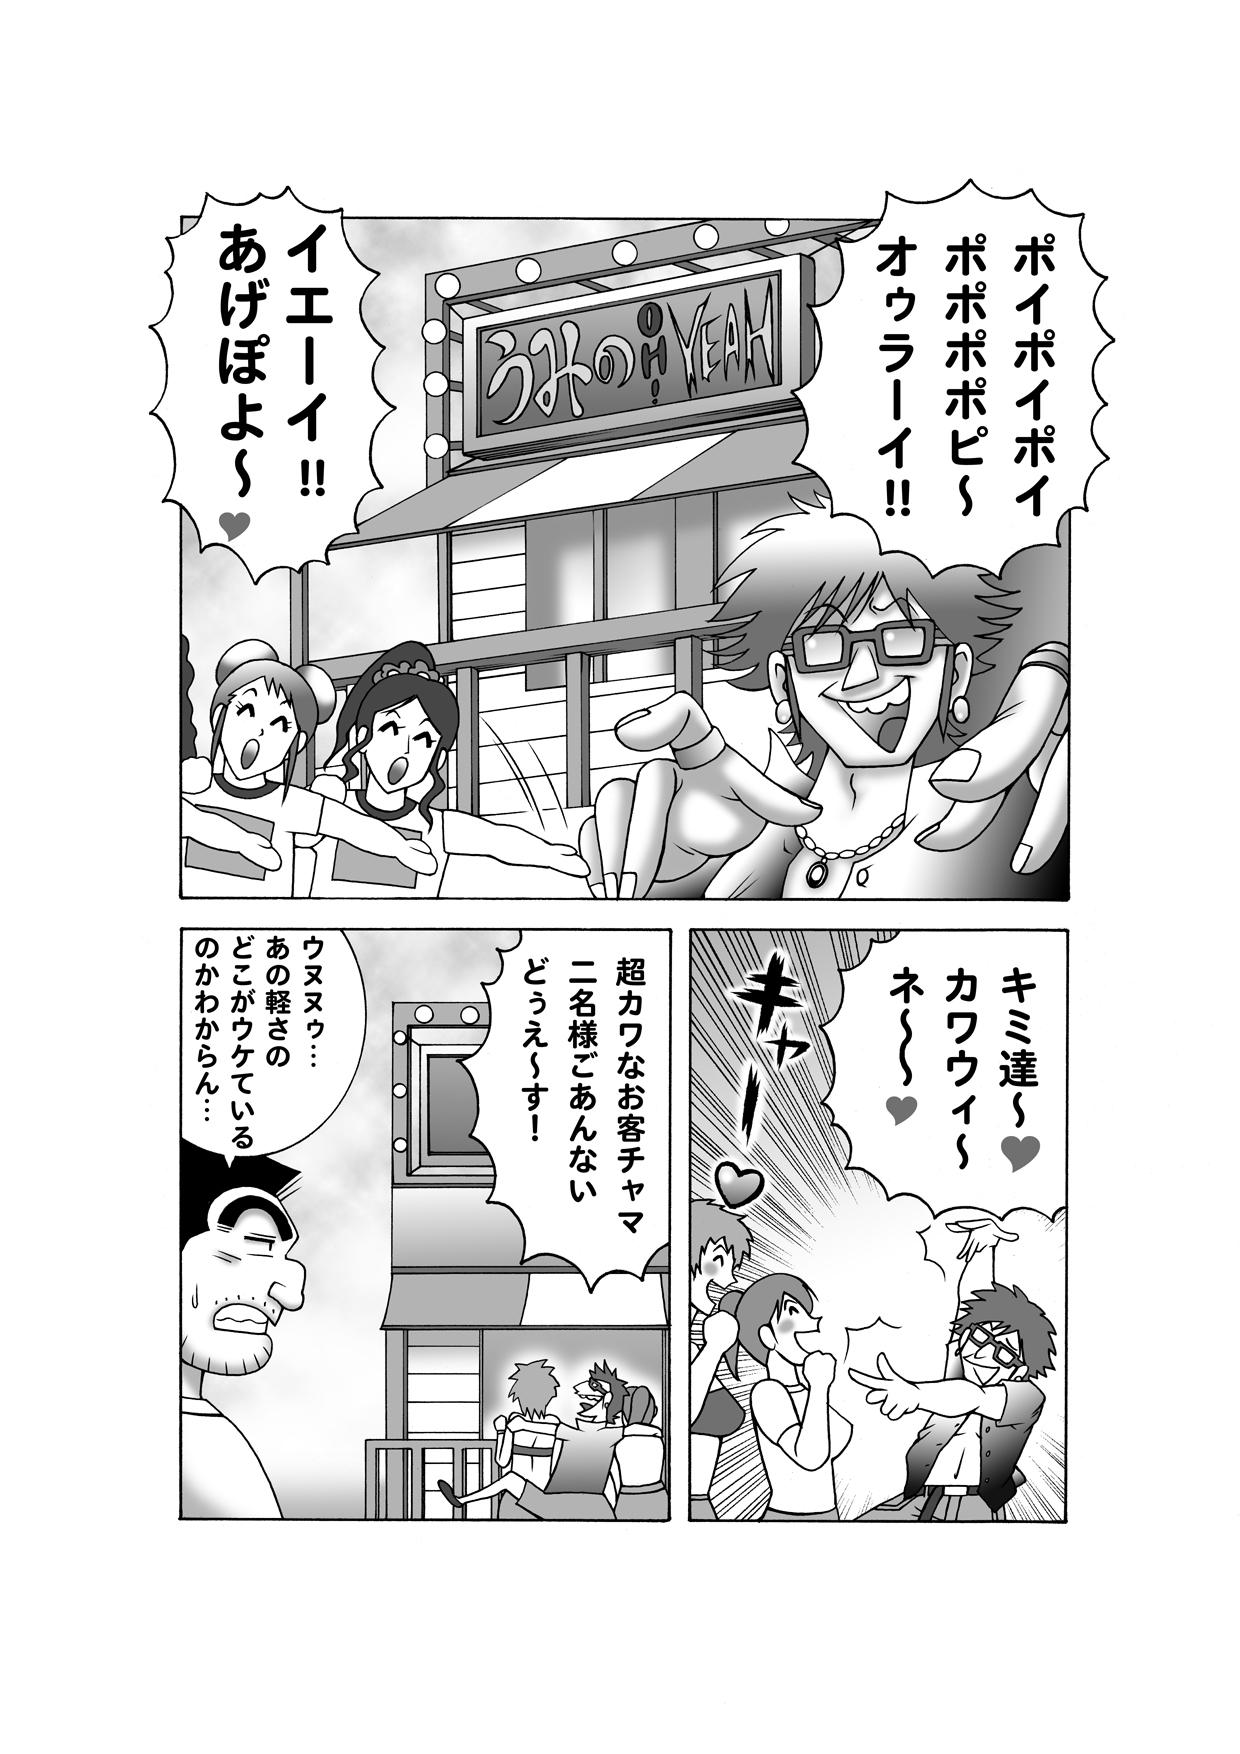 Maitsuki ko chi Kame Dainamaito vol.4 3